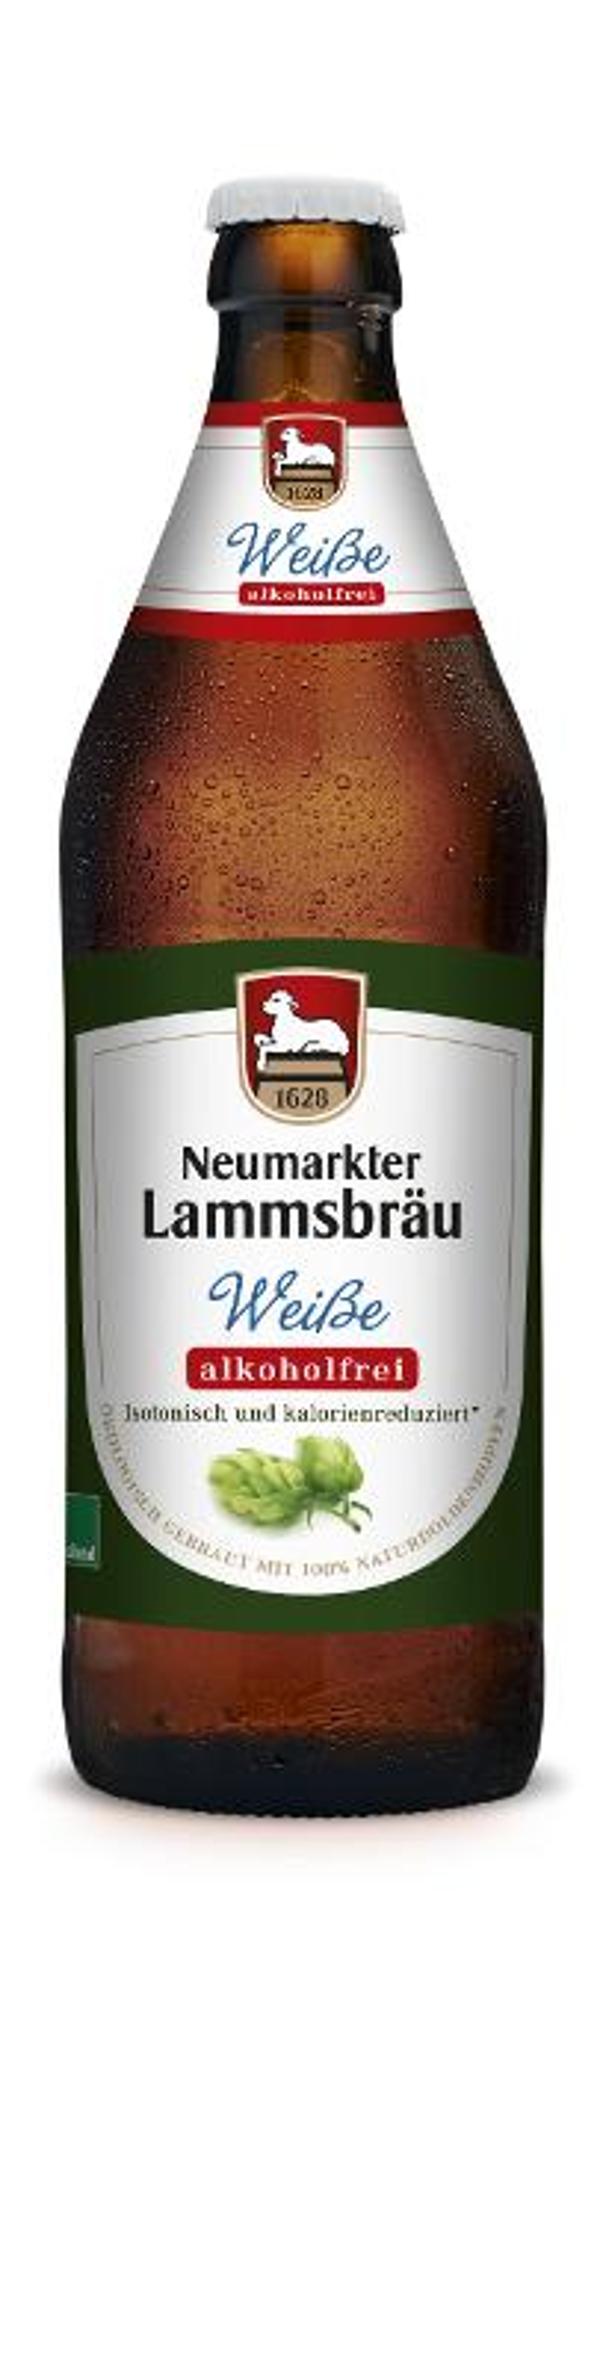 Produktfoto zu Lammsbräu Weisse alkoholfrei